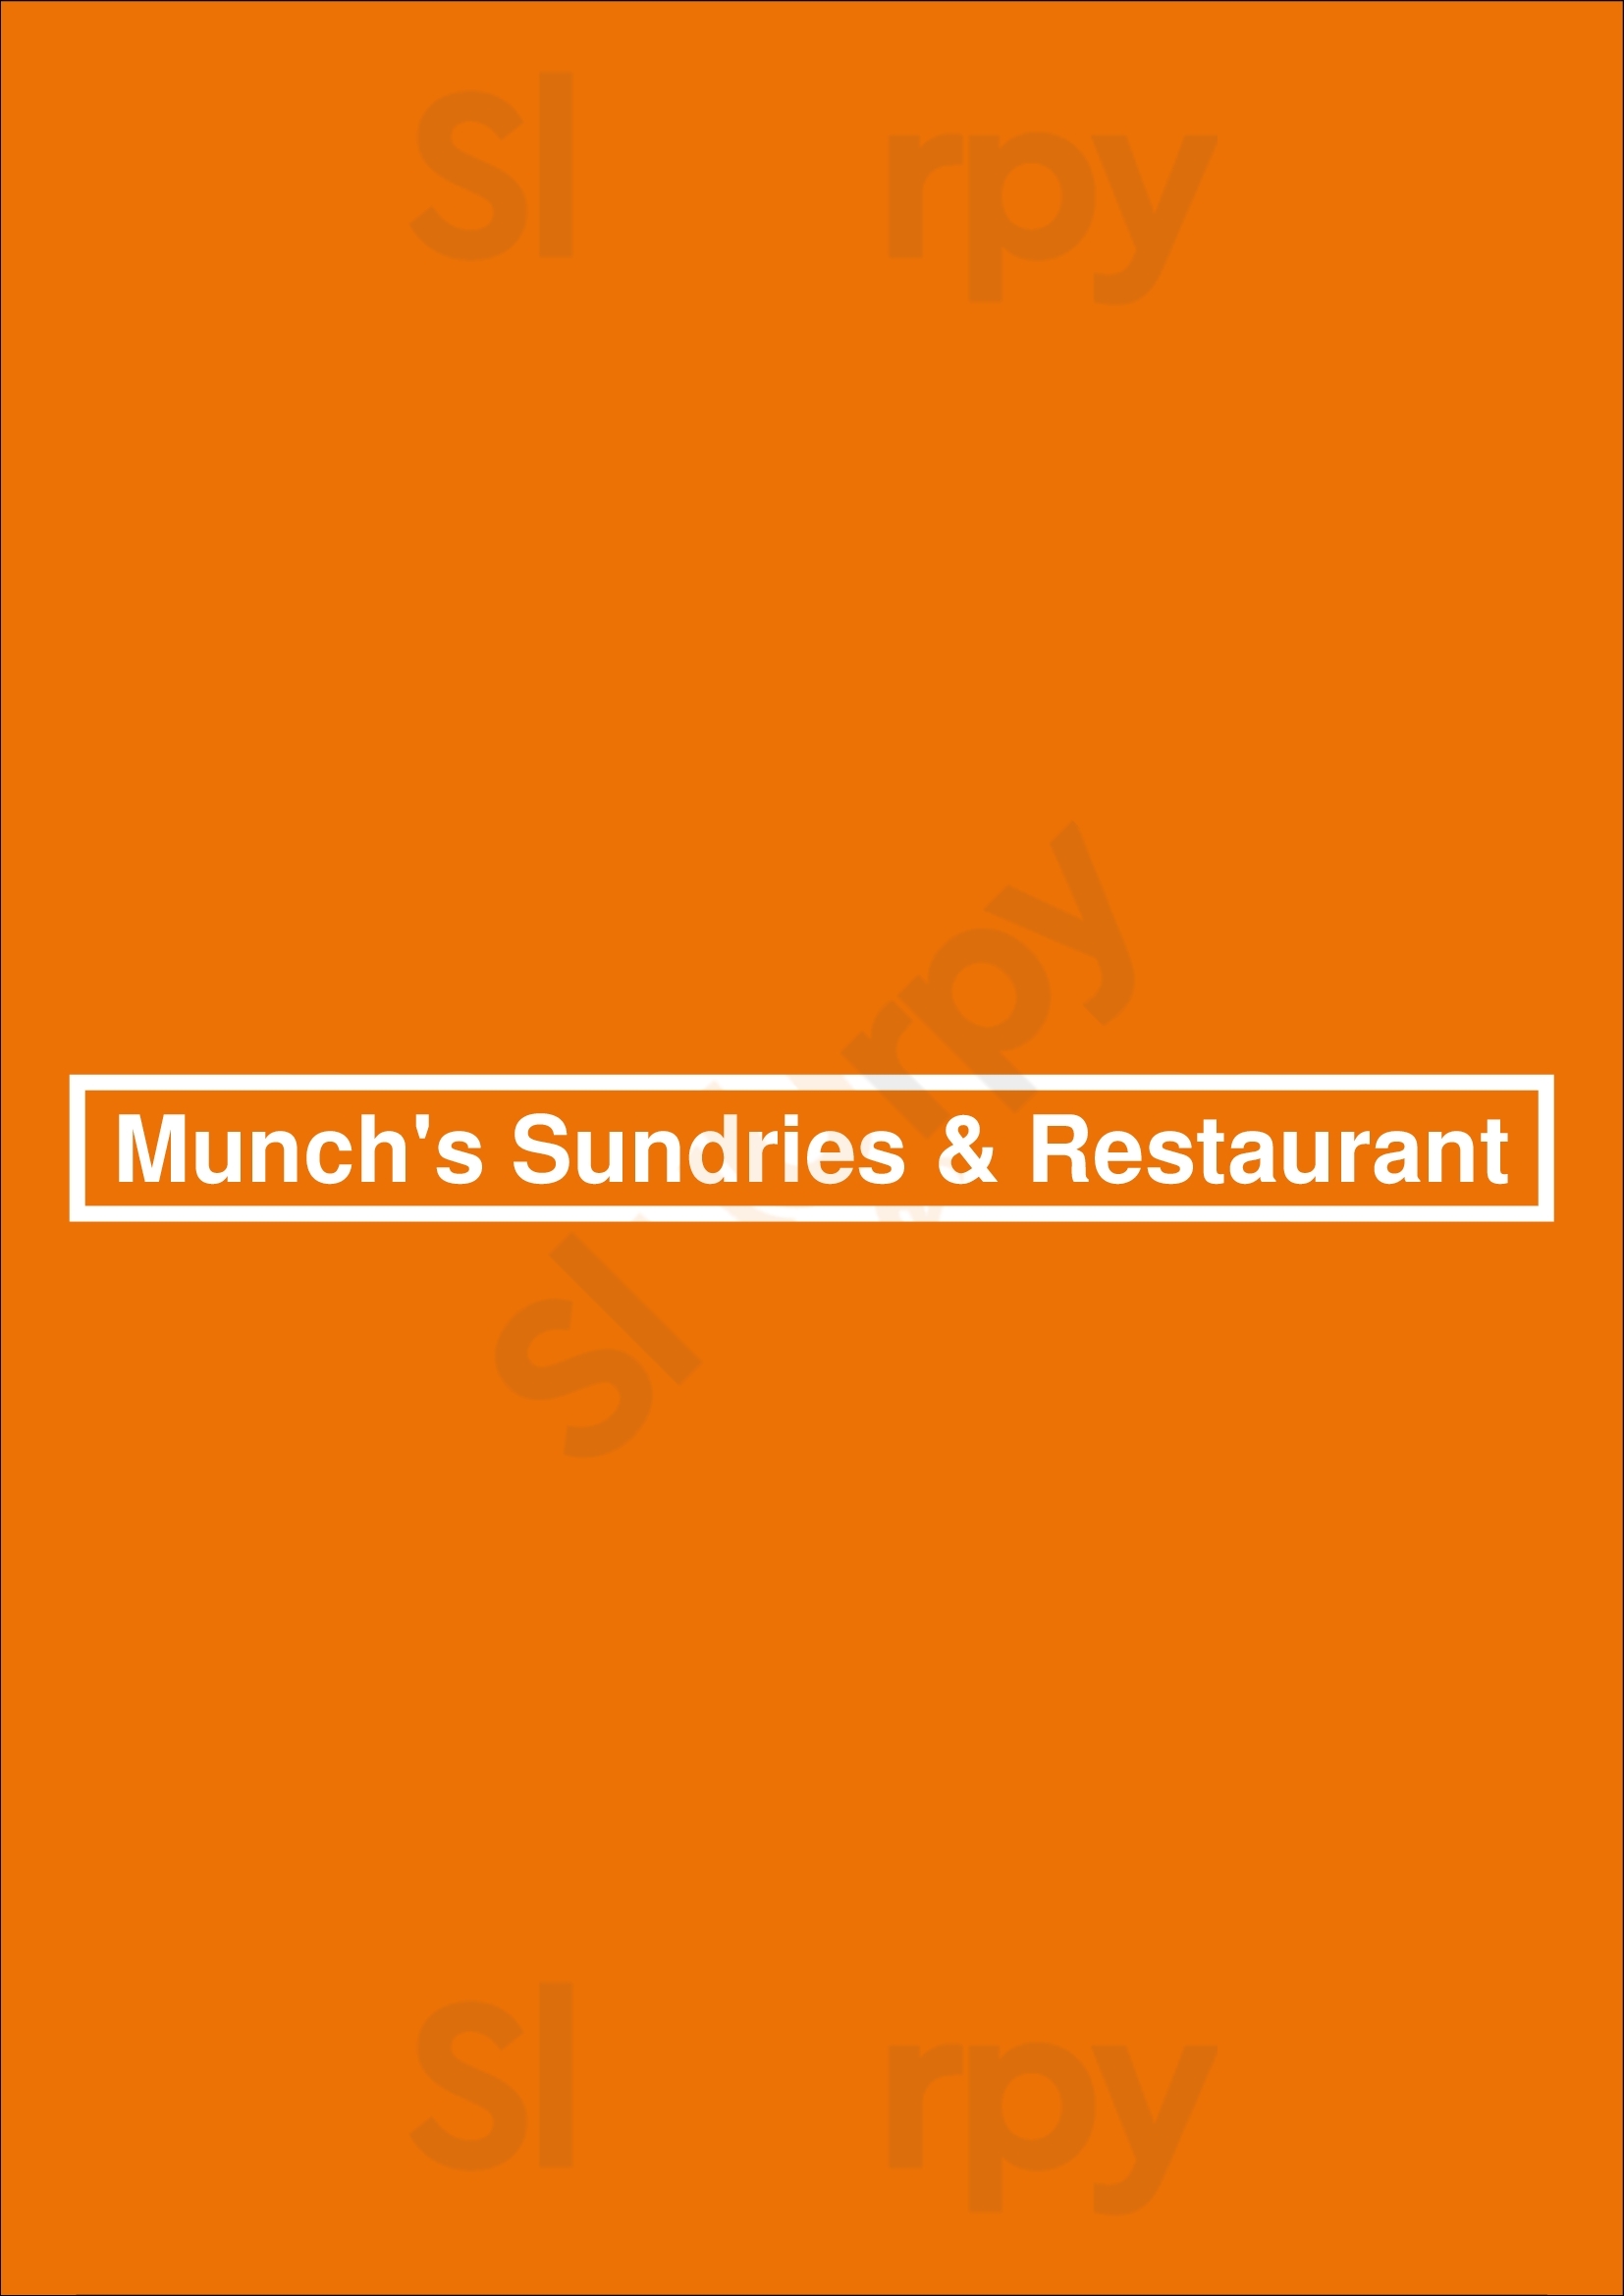 Munch's Sundries & Restaurant St. Petersburg Menu - 1